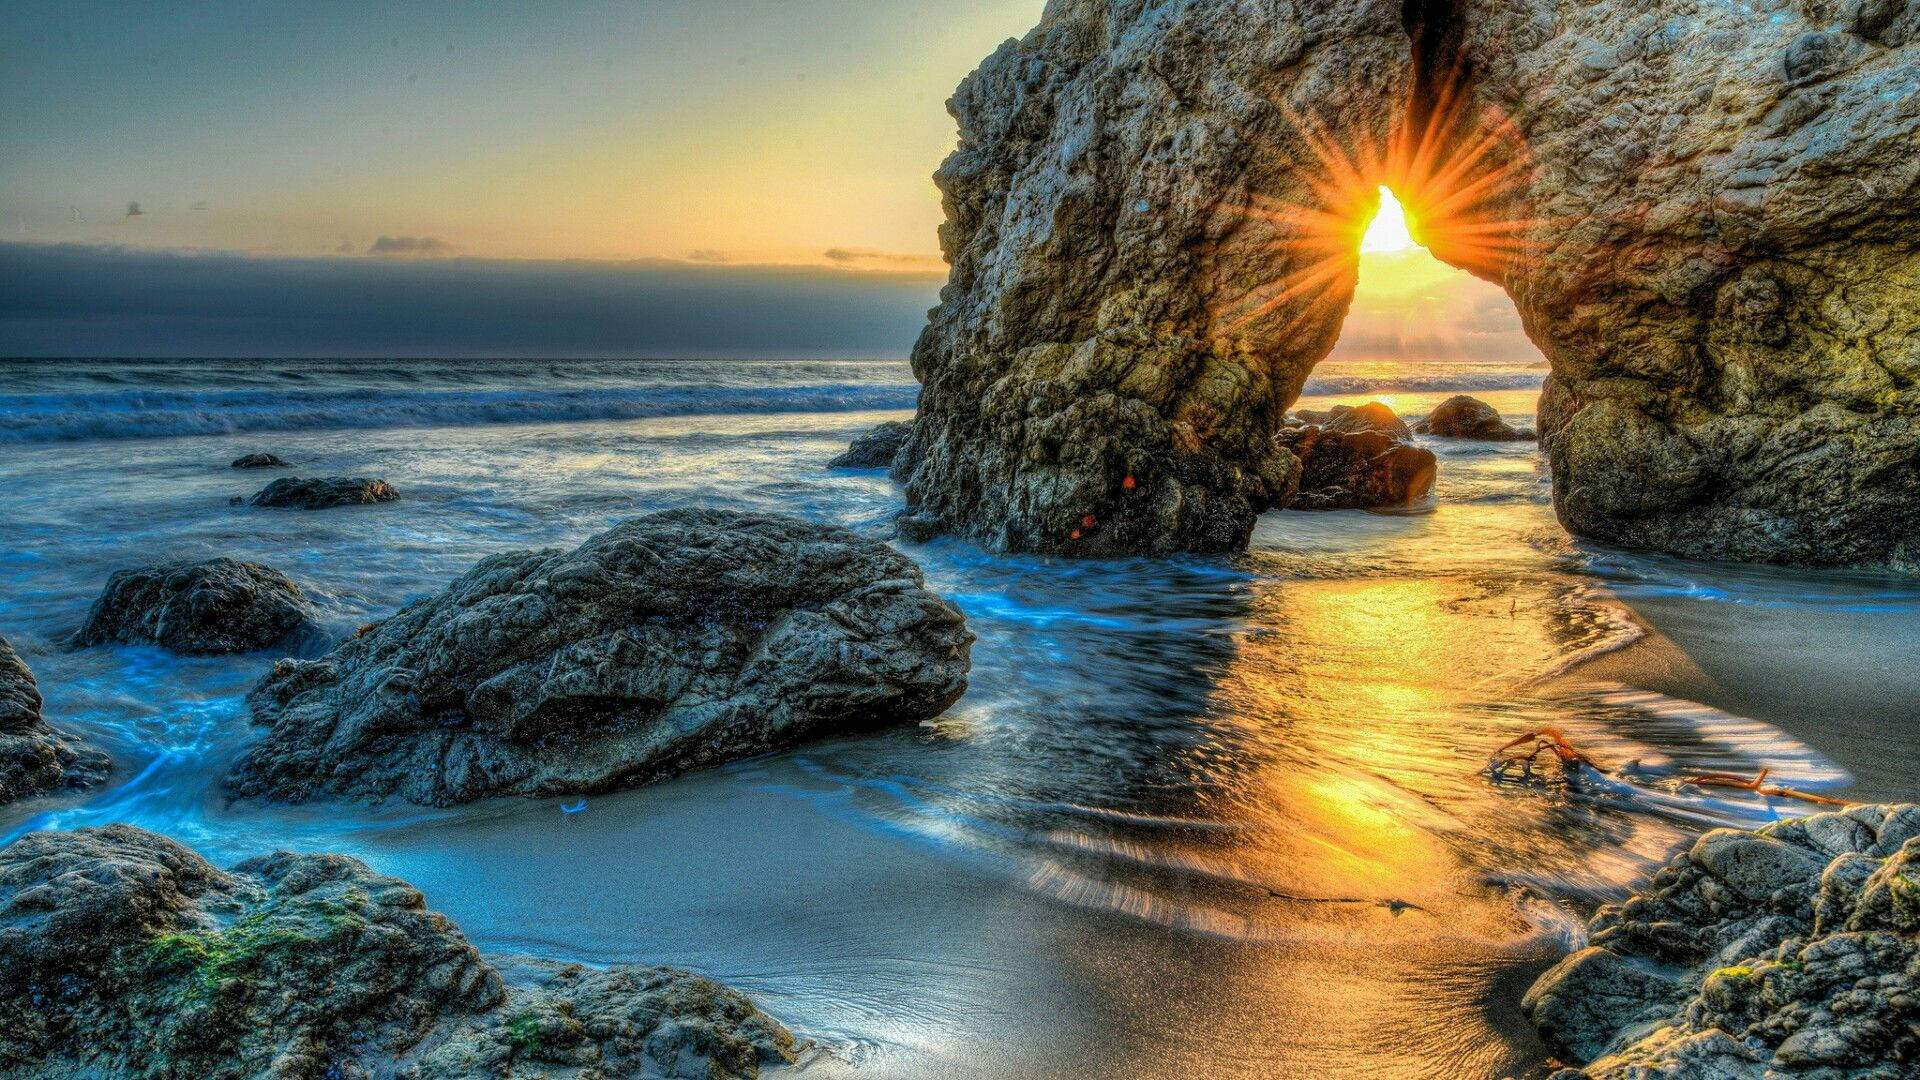 Enjoy a peaceful sunset at Malibu Beach in California Wallpaper